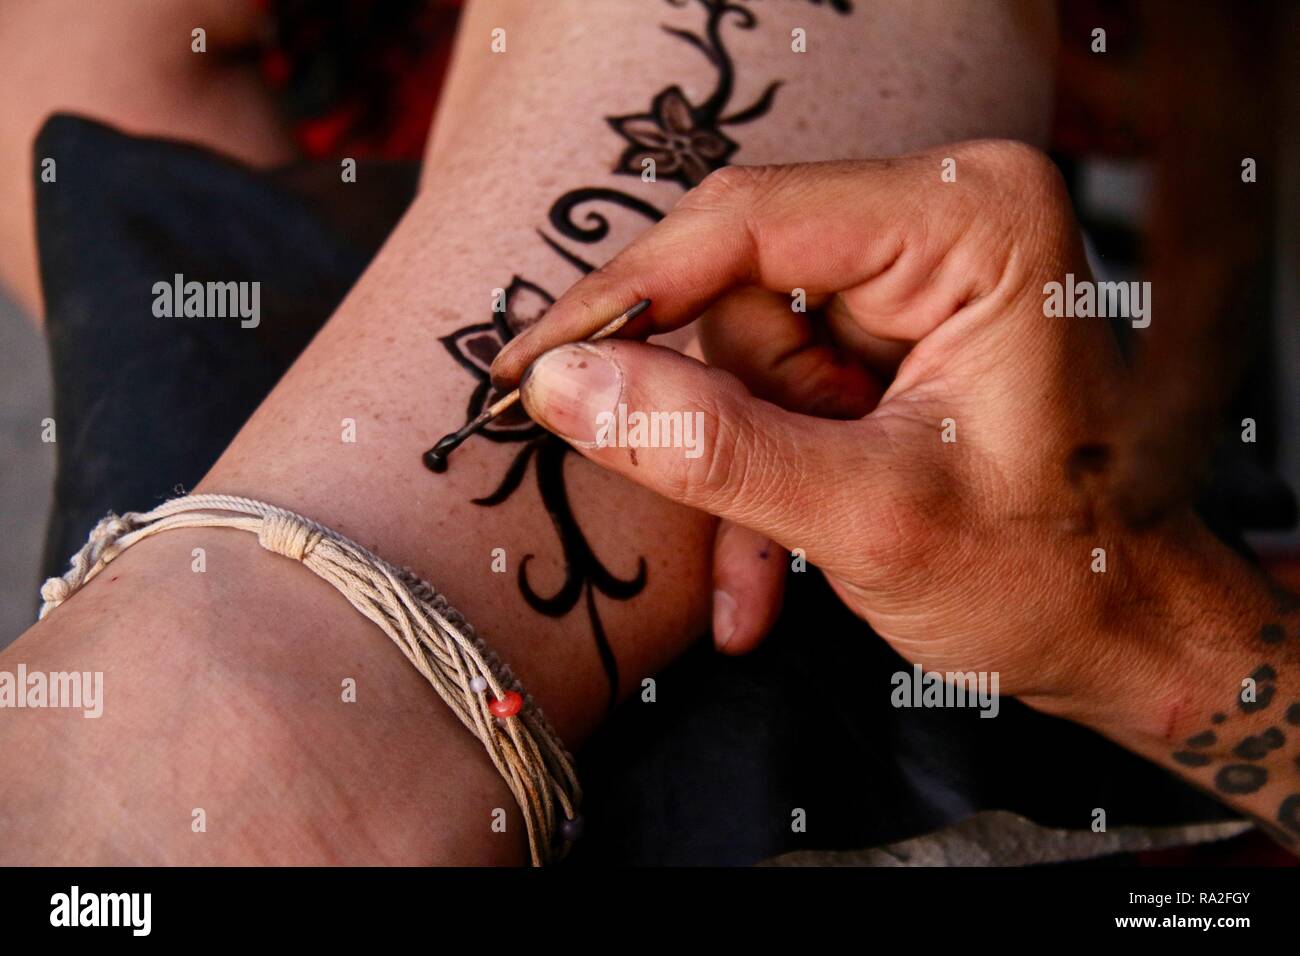 an artist hand freestyle drawing a henna tattoo design up a ladies leg RA2FGY